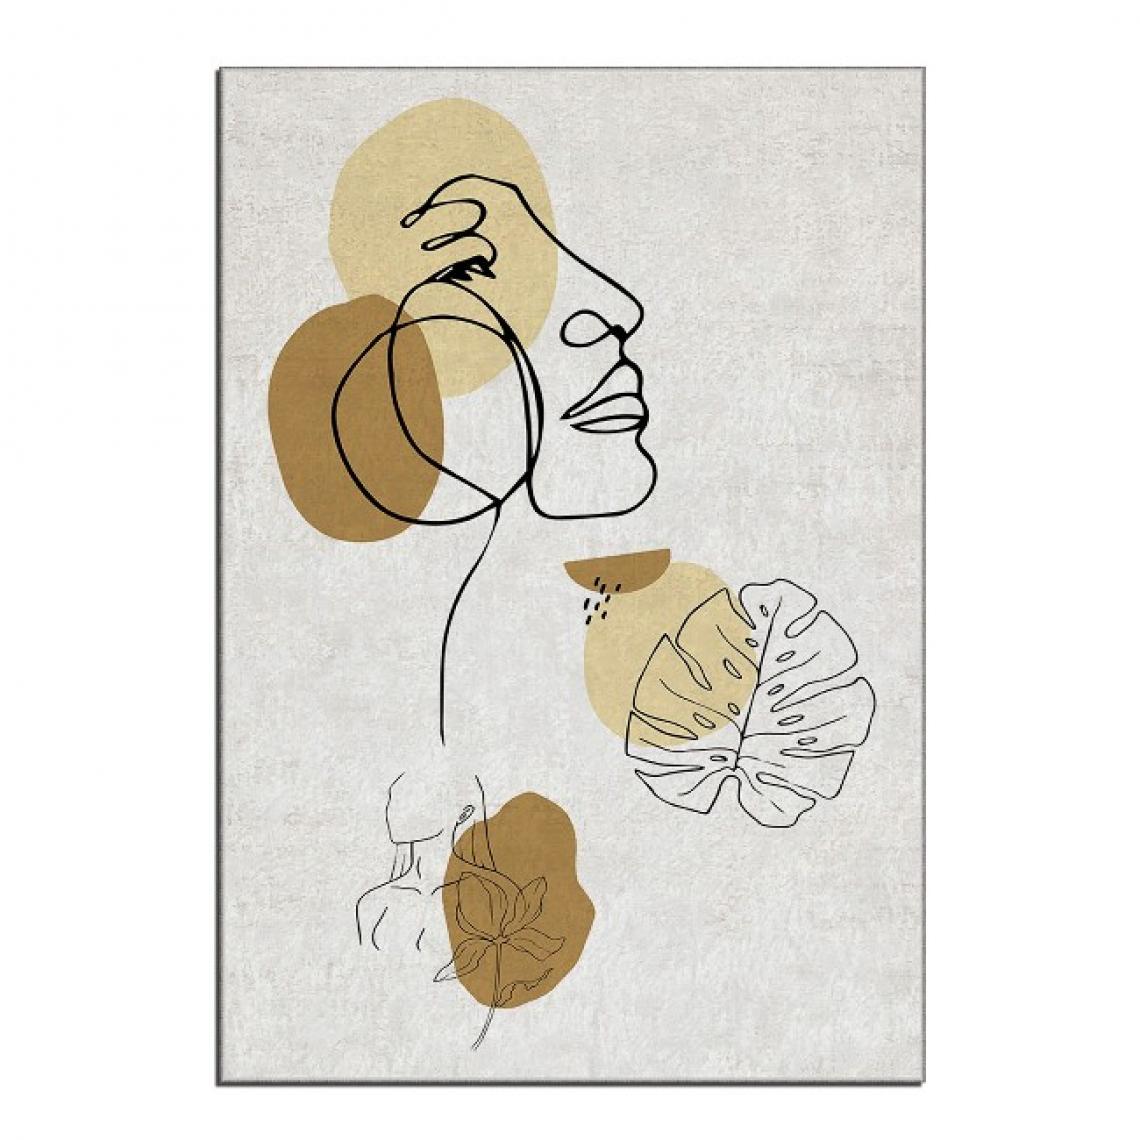 Homemania - HOMEMANIA Tapis décoratif Outline - Blanc, Marron - 100 x 140 cm - Tapis